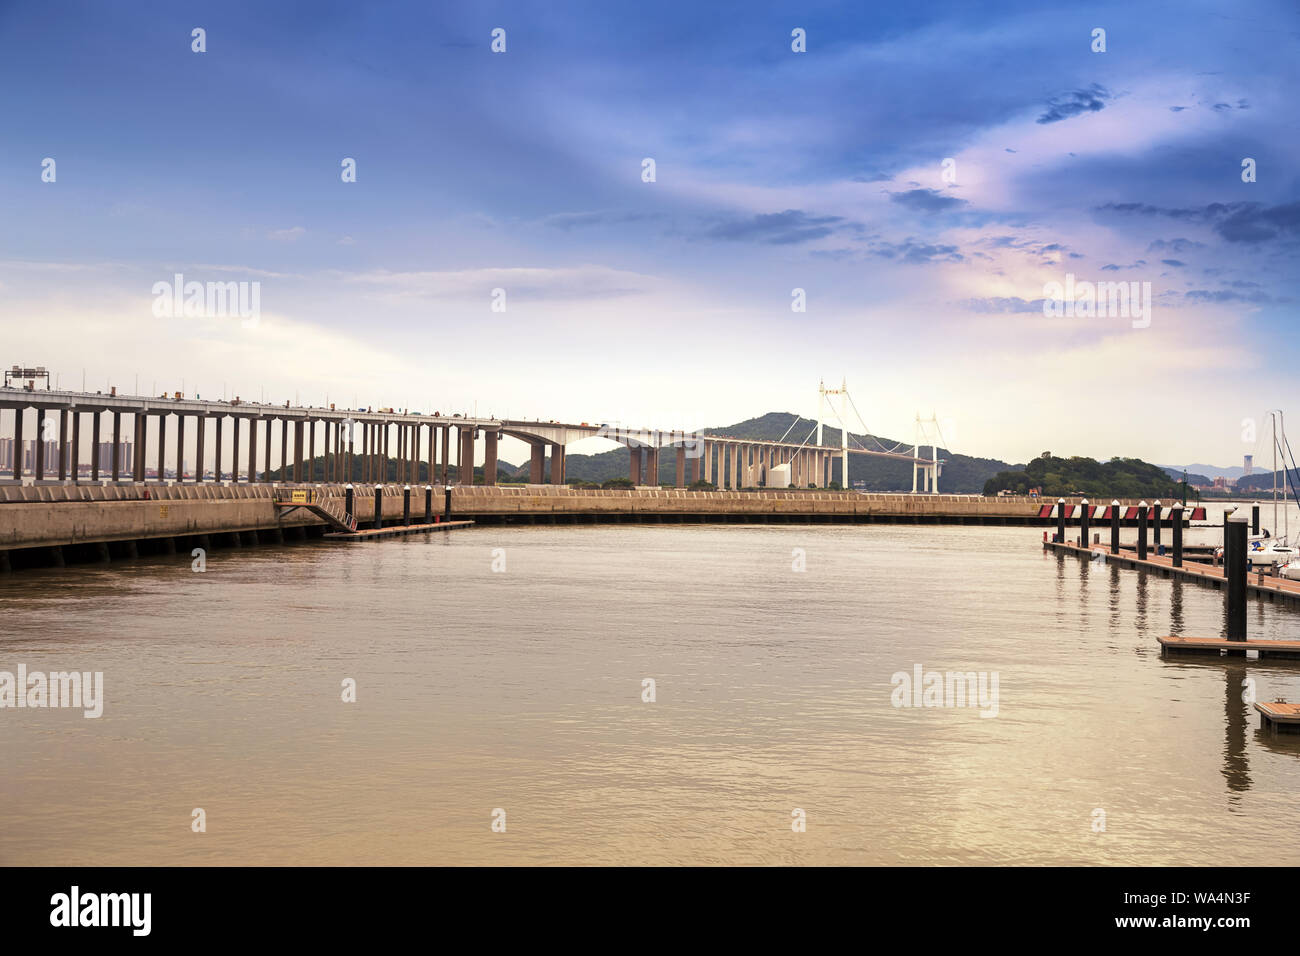 Guangdong pearl river mouth humen bridge scenery Stock Photo